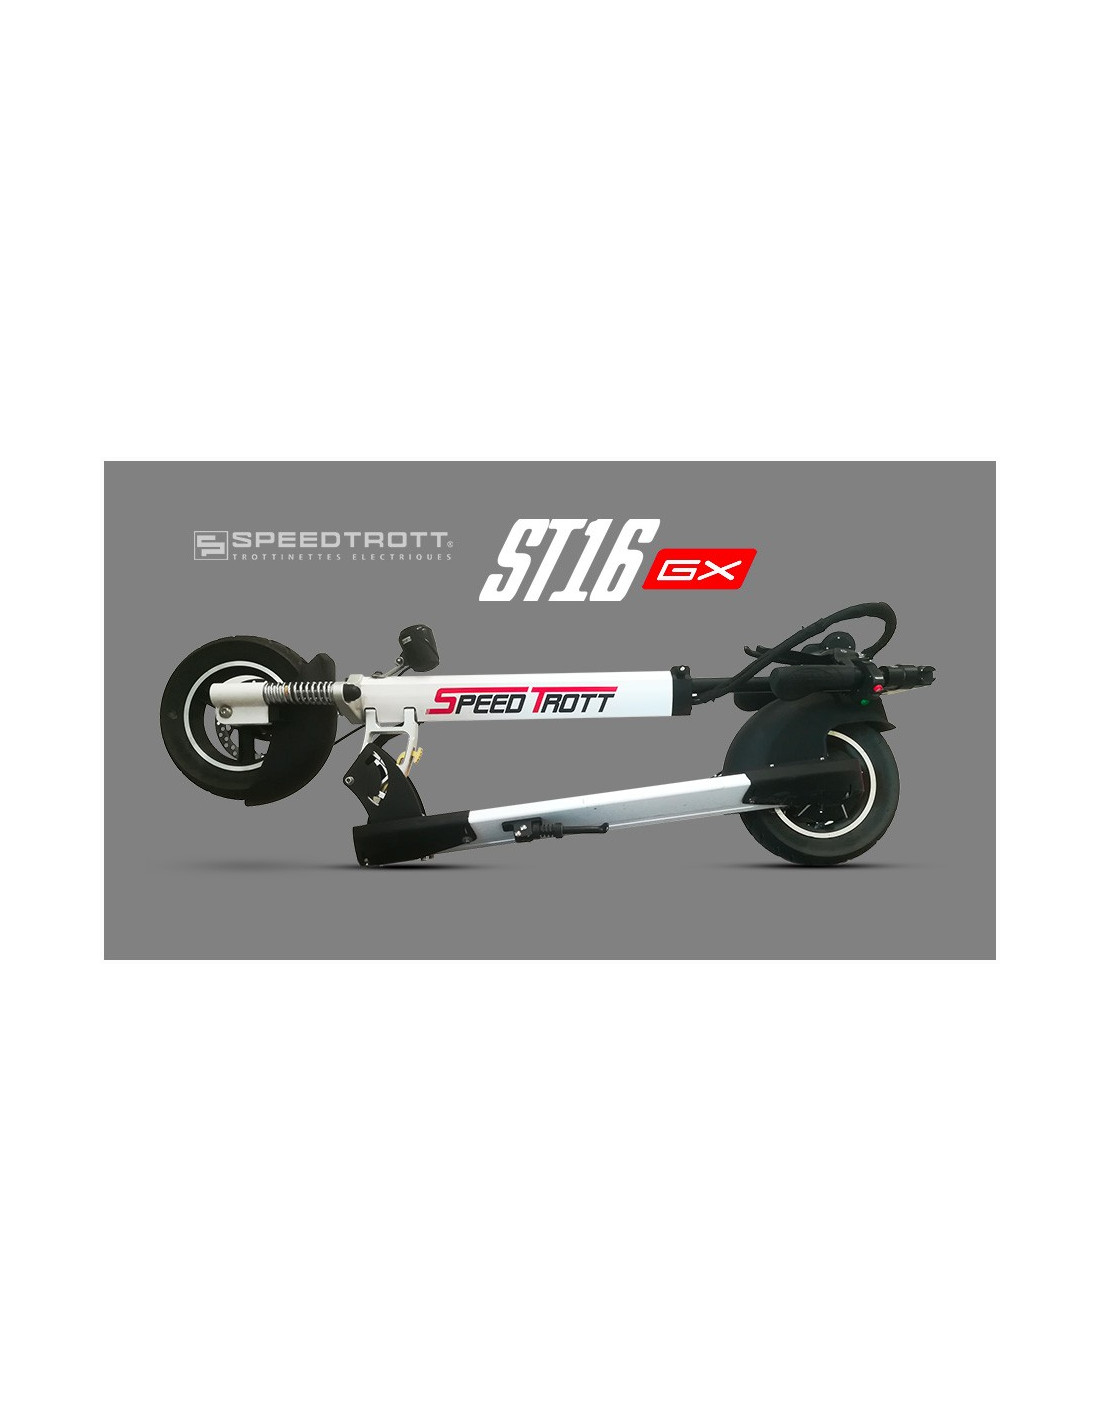 SpeedTrott XR-500